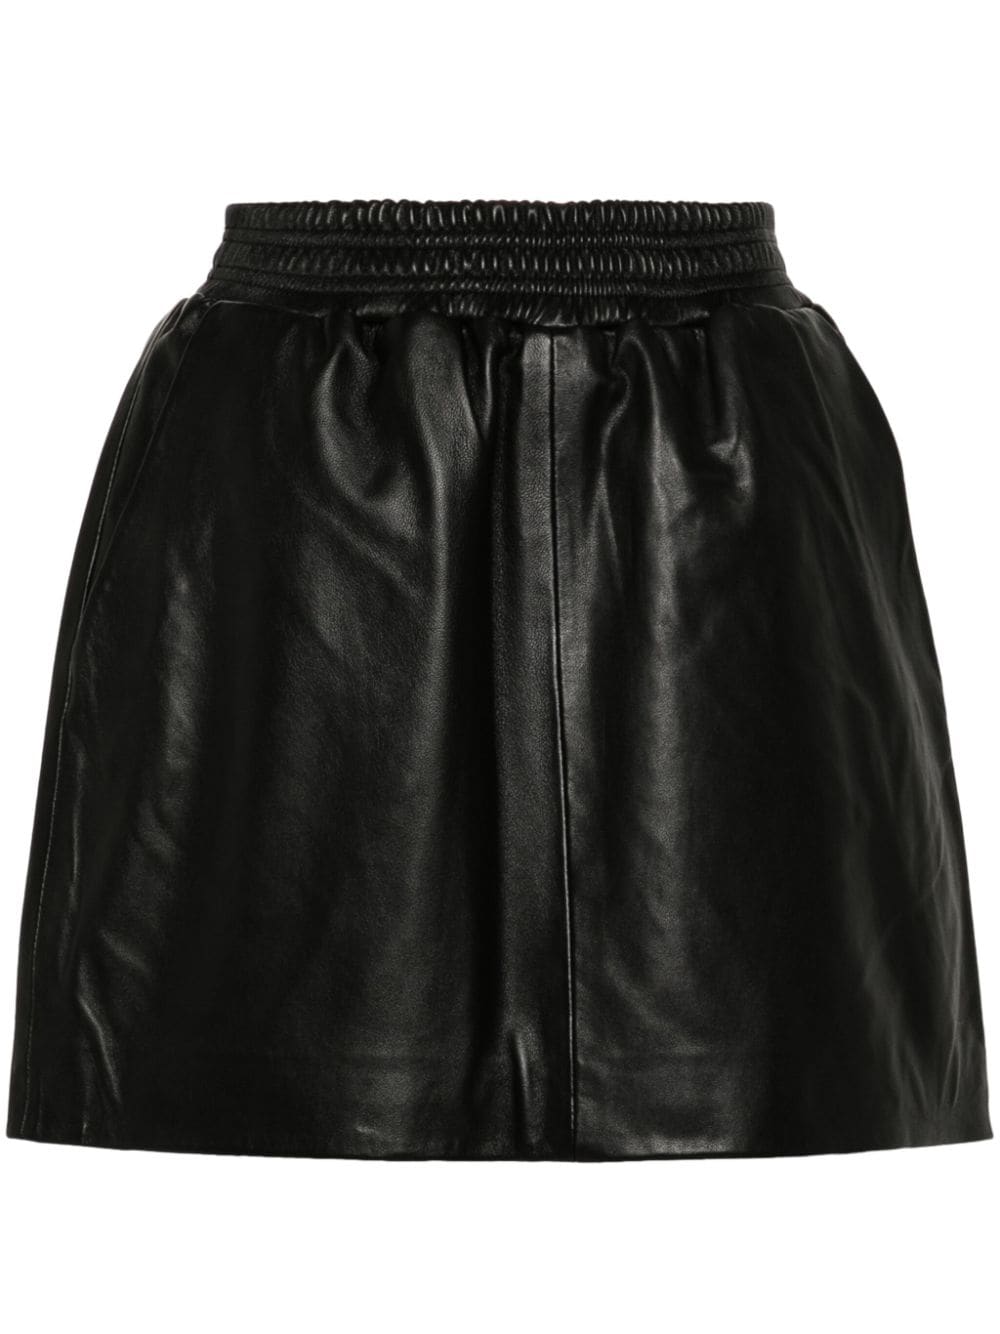 Arma Mare leather skirt - Black von Arma